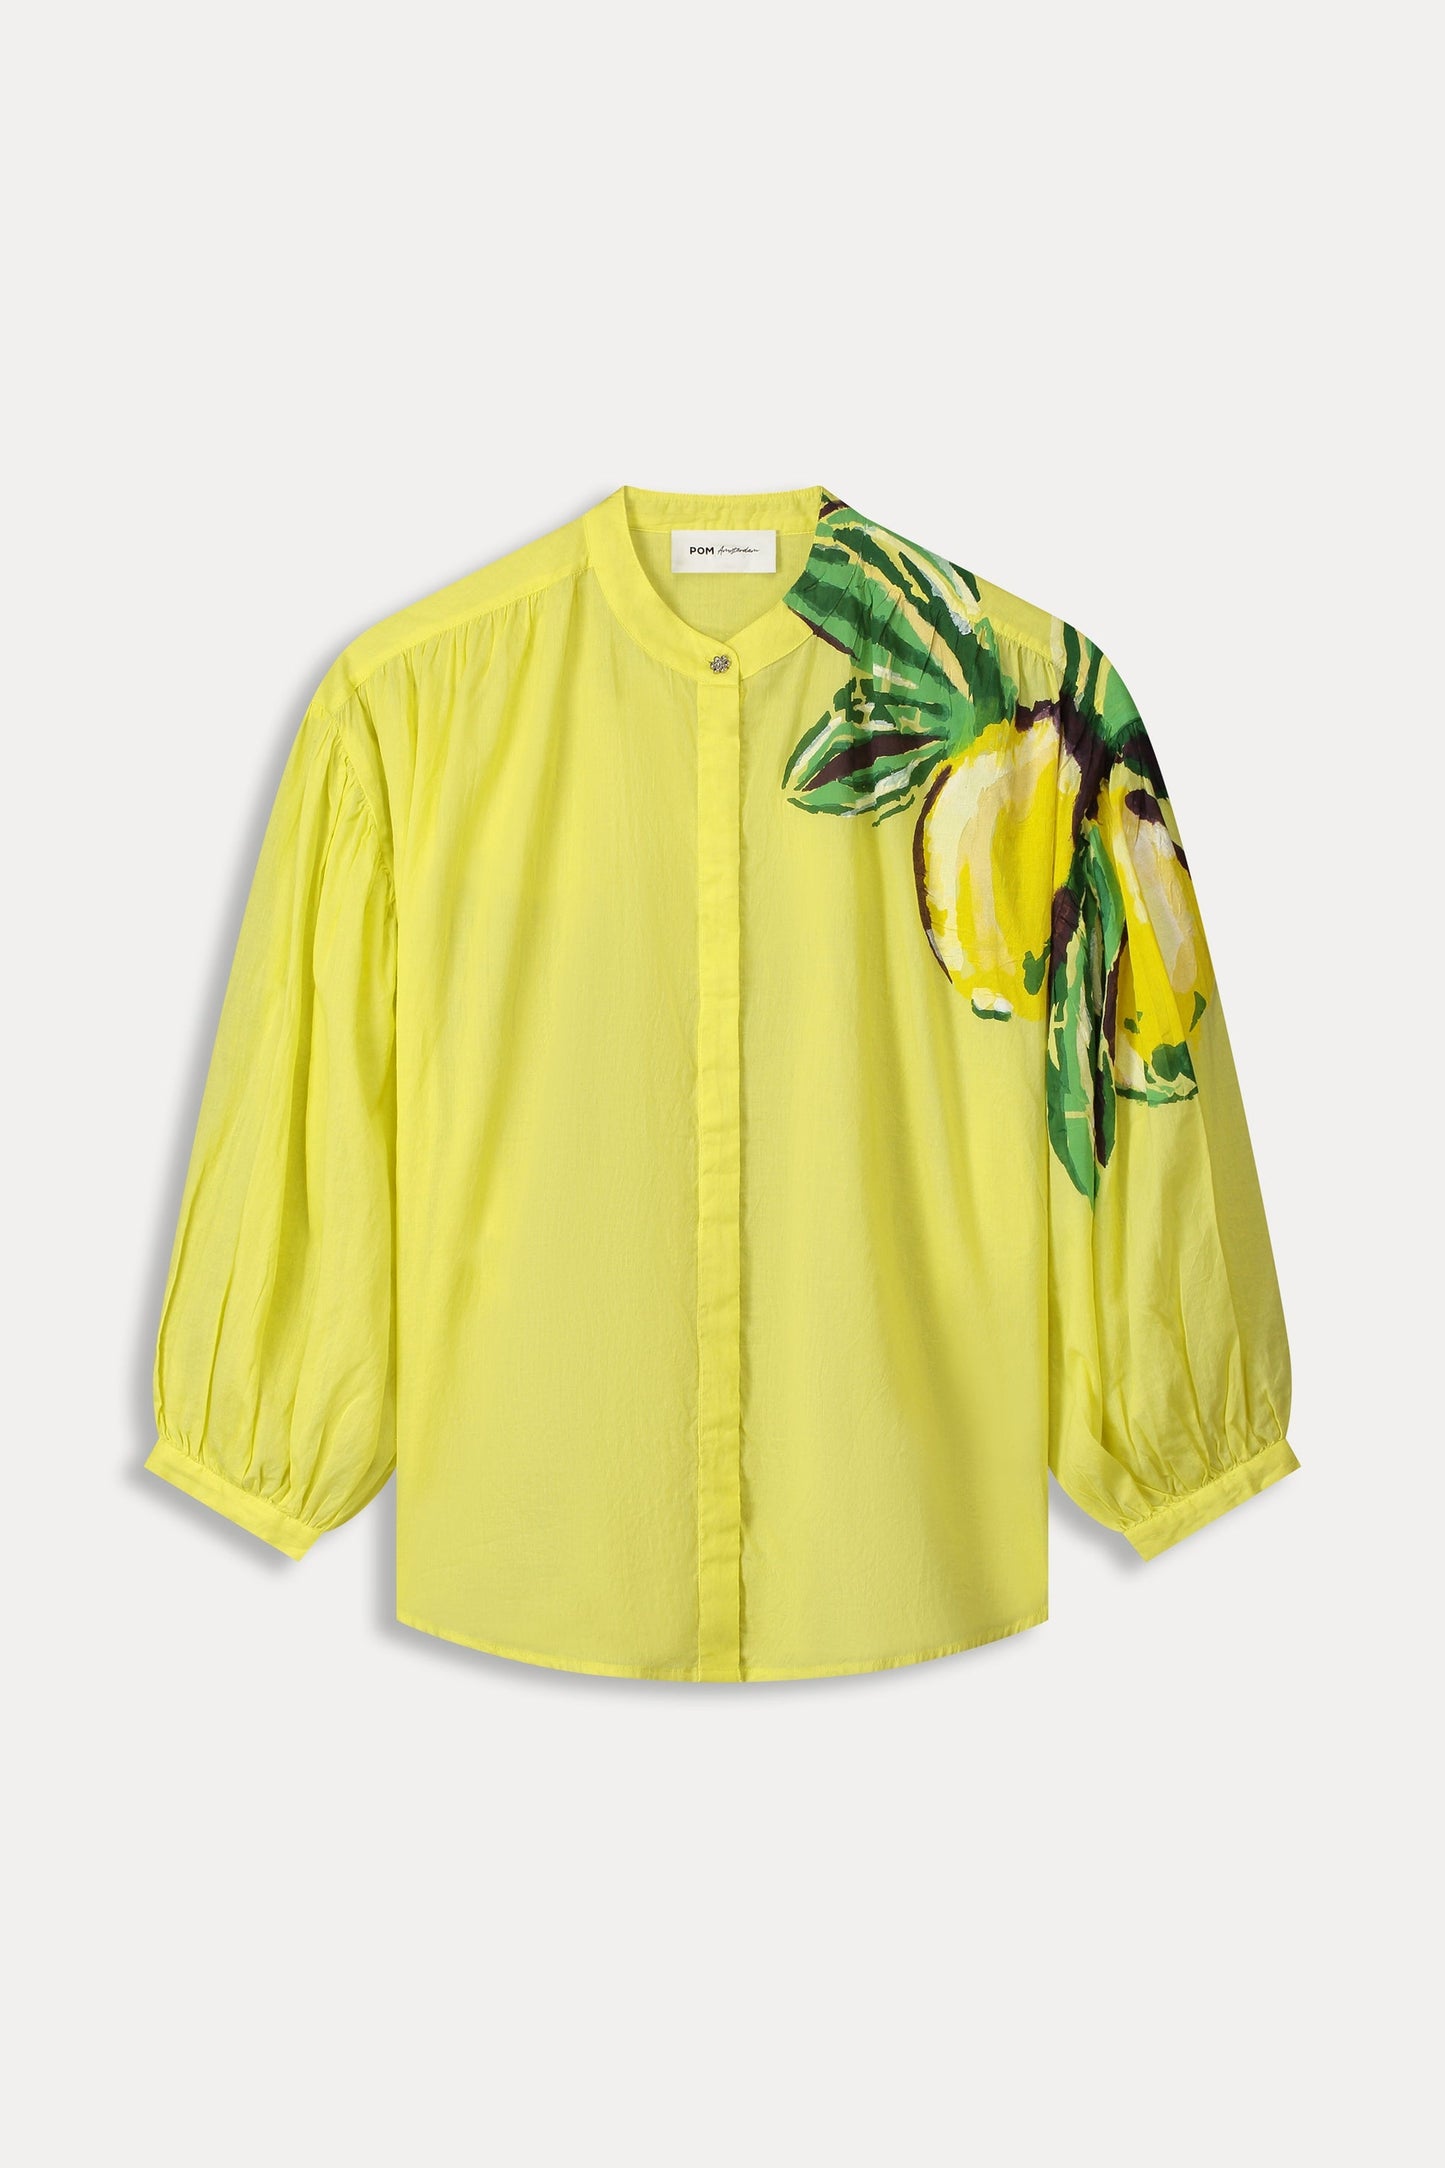 Pom blouse yellow